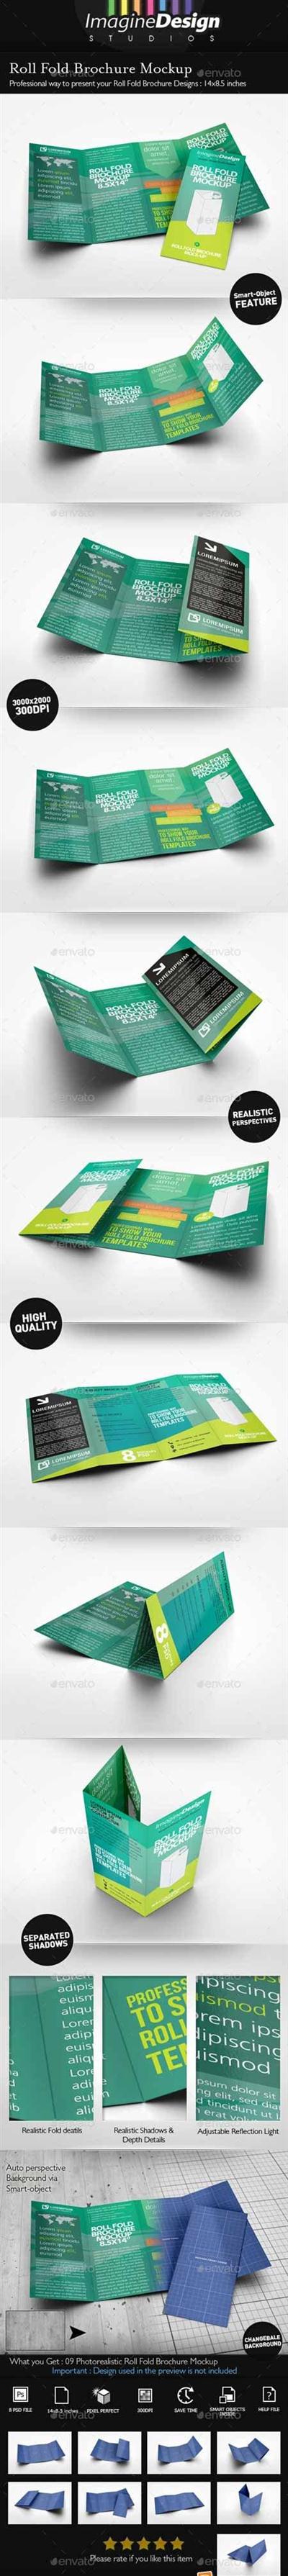 Graphicriver Roll Fold Brochure Mockup 10020772